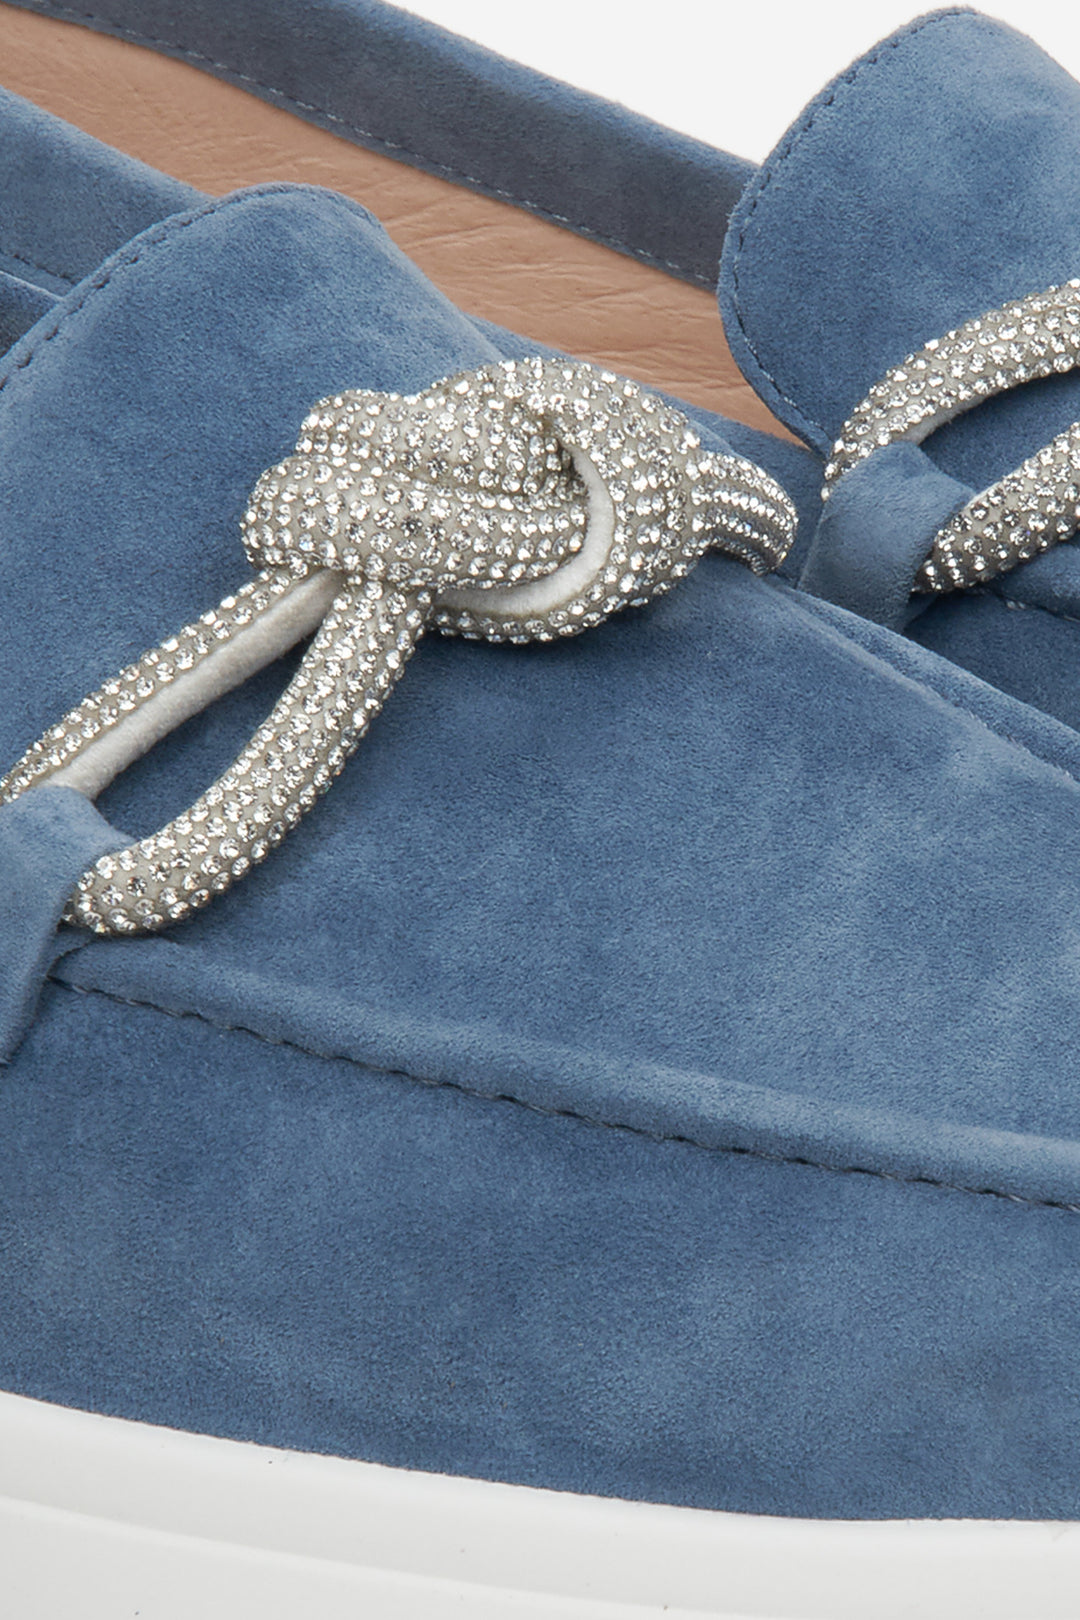 Estro women's blue velour moccasins - close-up on the decorative bow.